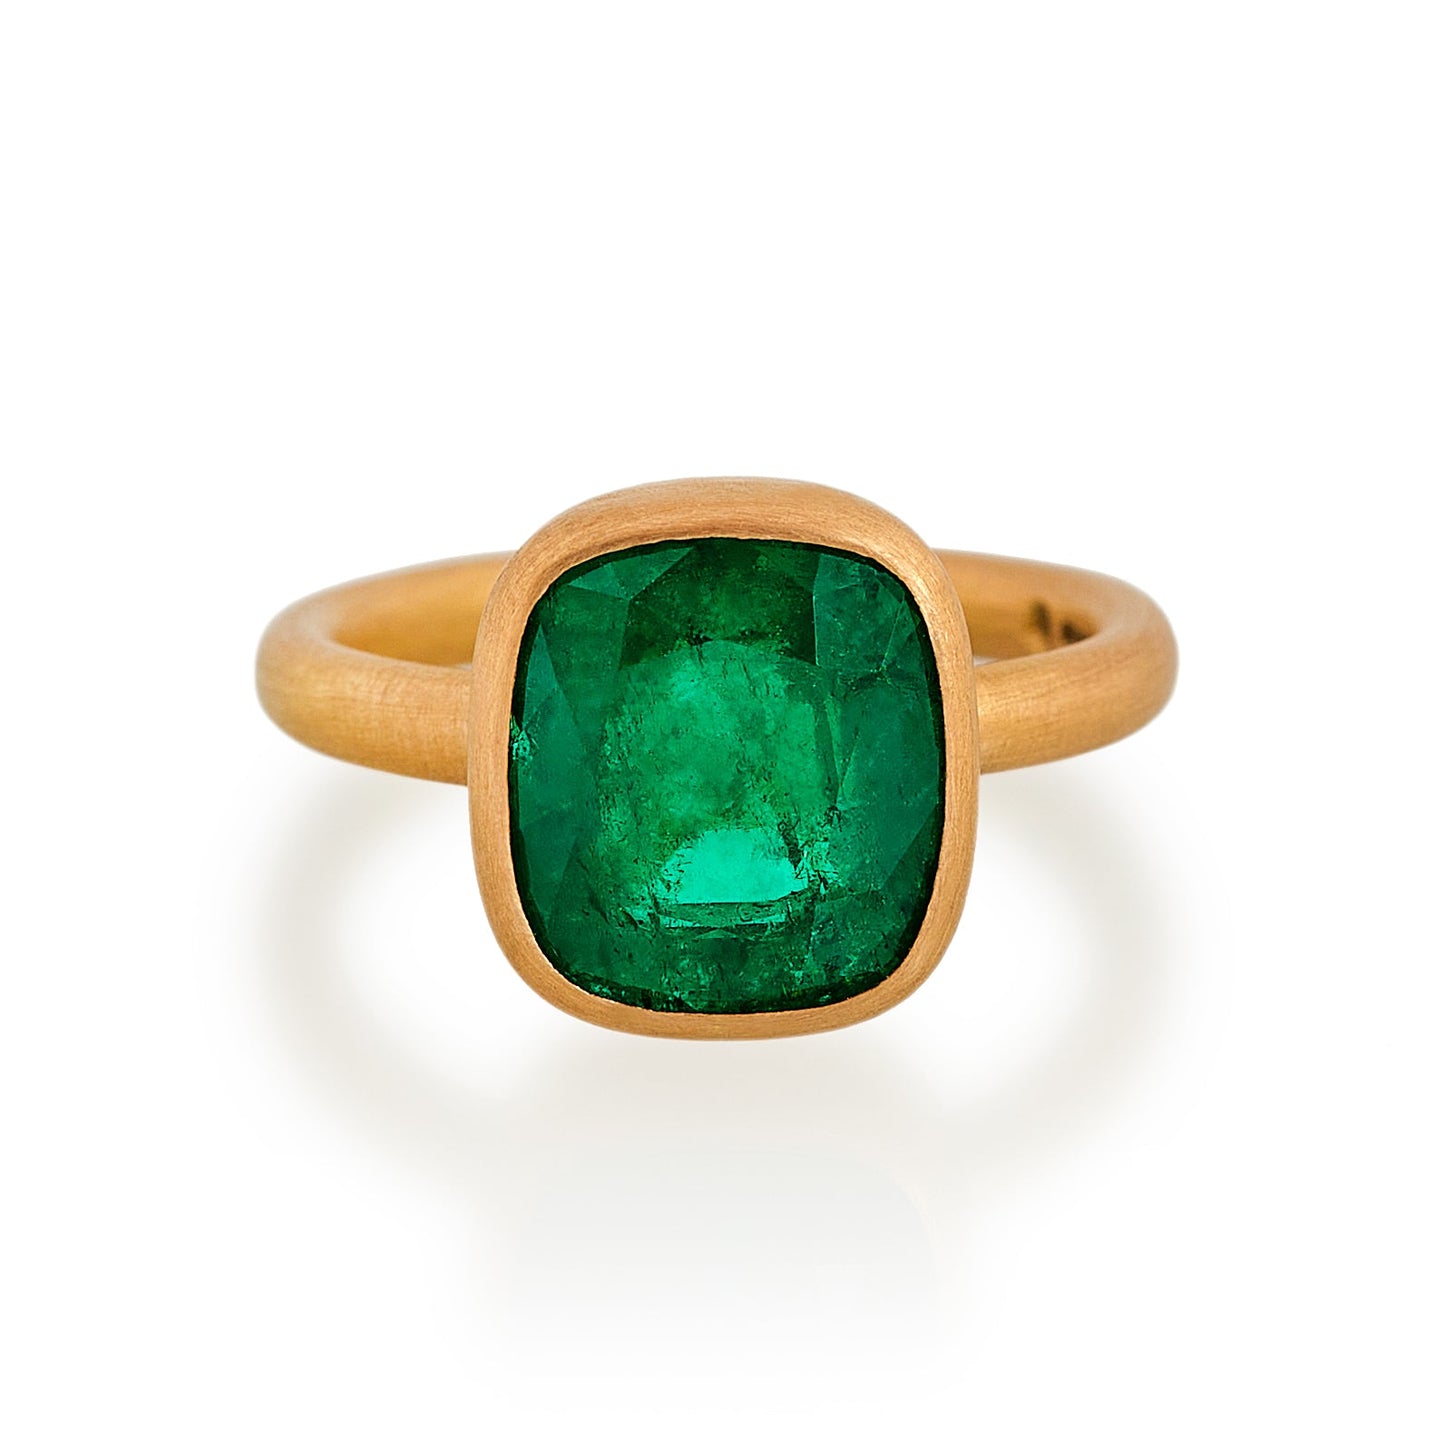 Cushion Cut Emerald Ring, 22ct Gold